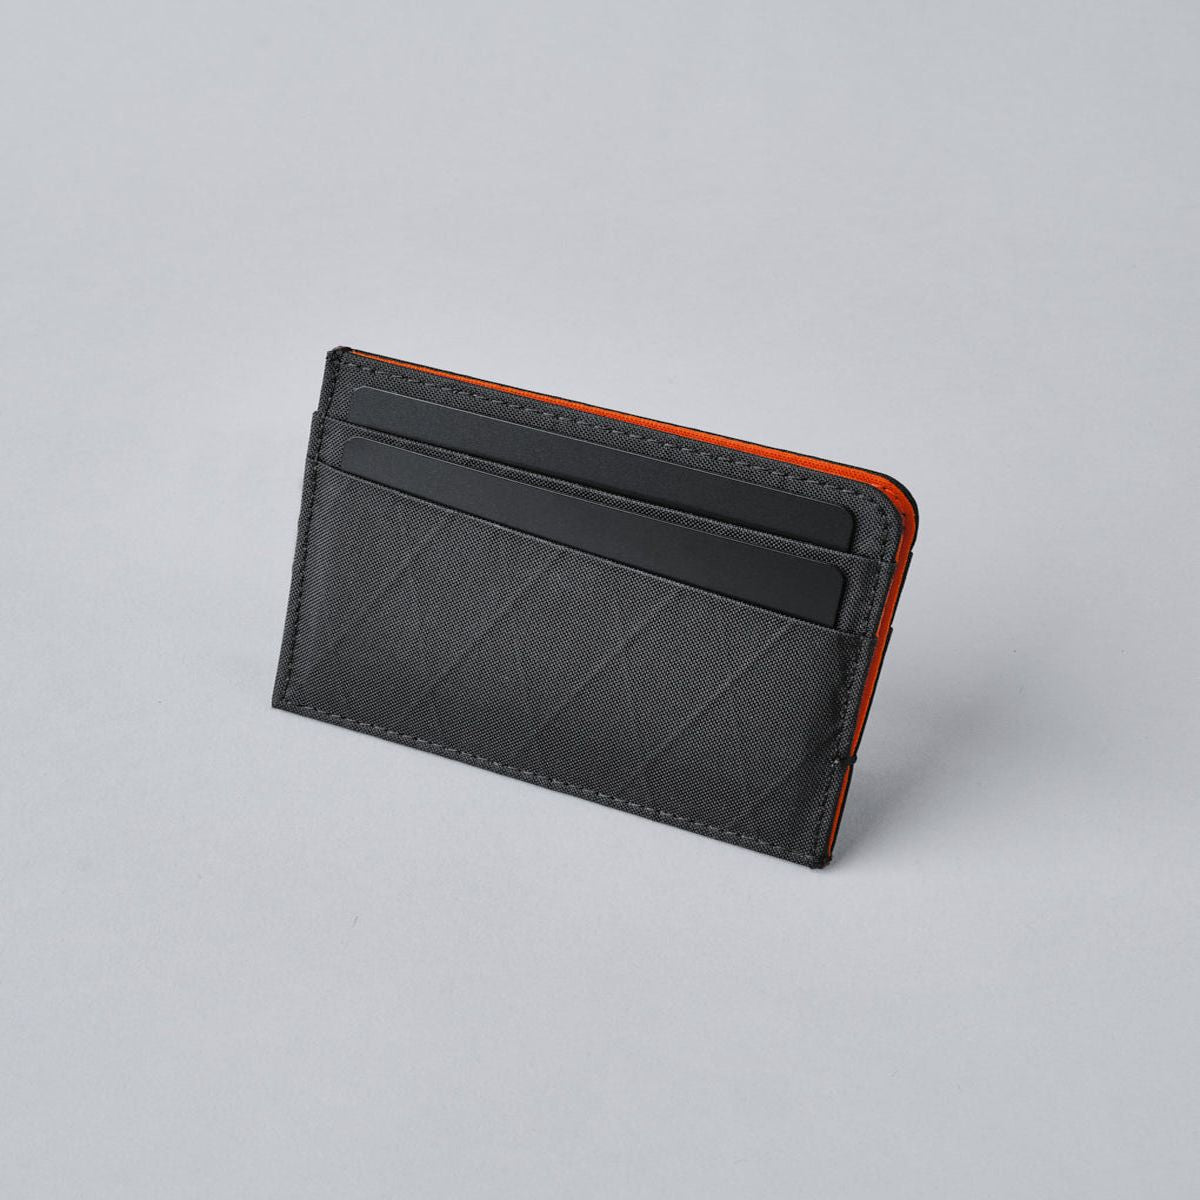 Alpaka ARK Card Wallet - Black X-Pac VX21